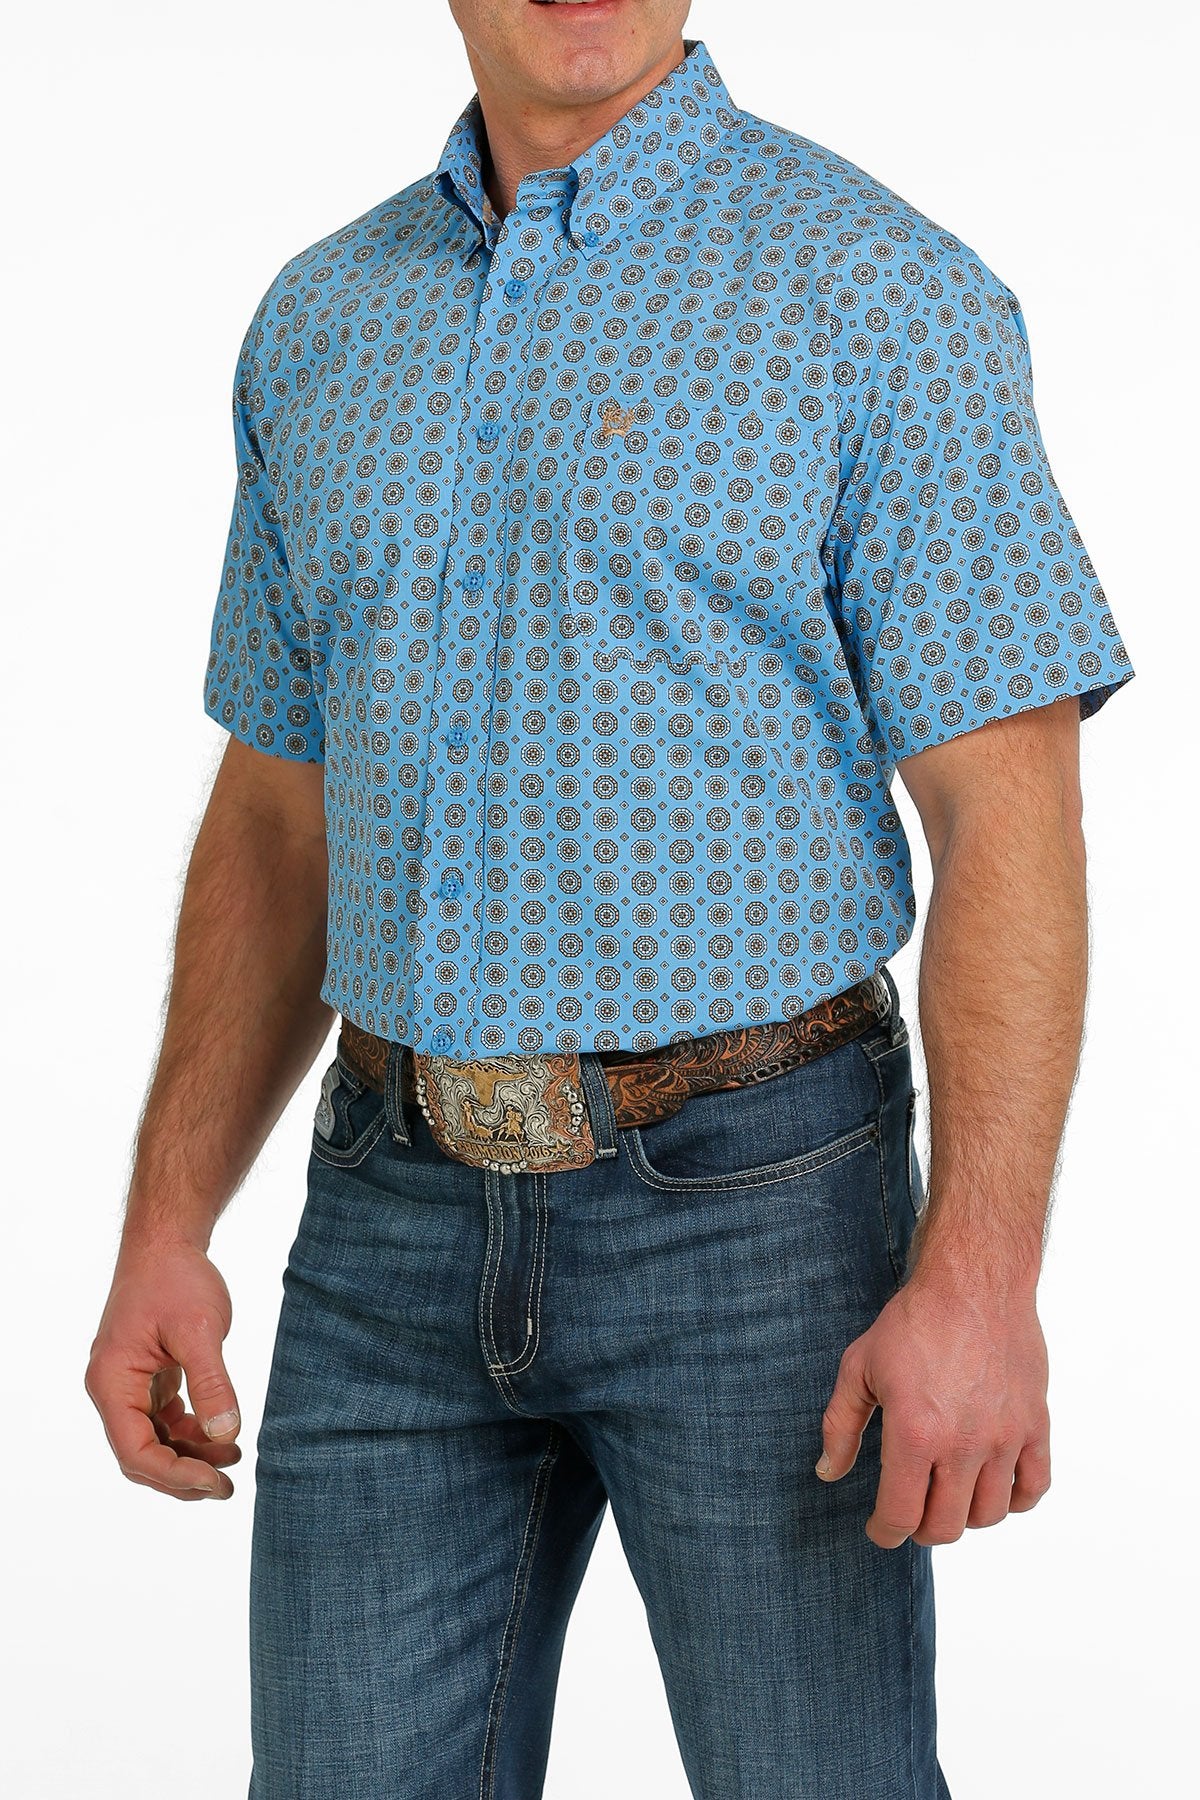 Cinch Mens Medallion Print Button-Down Western Short Sleeve Shirt - Blue/Gray